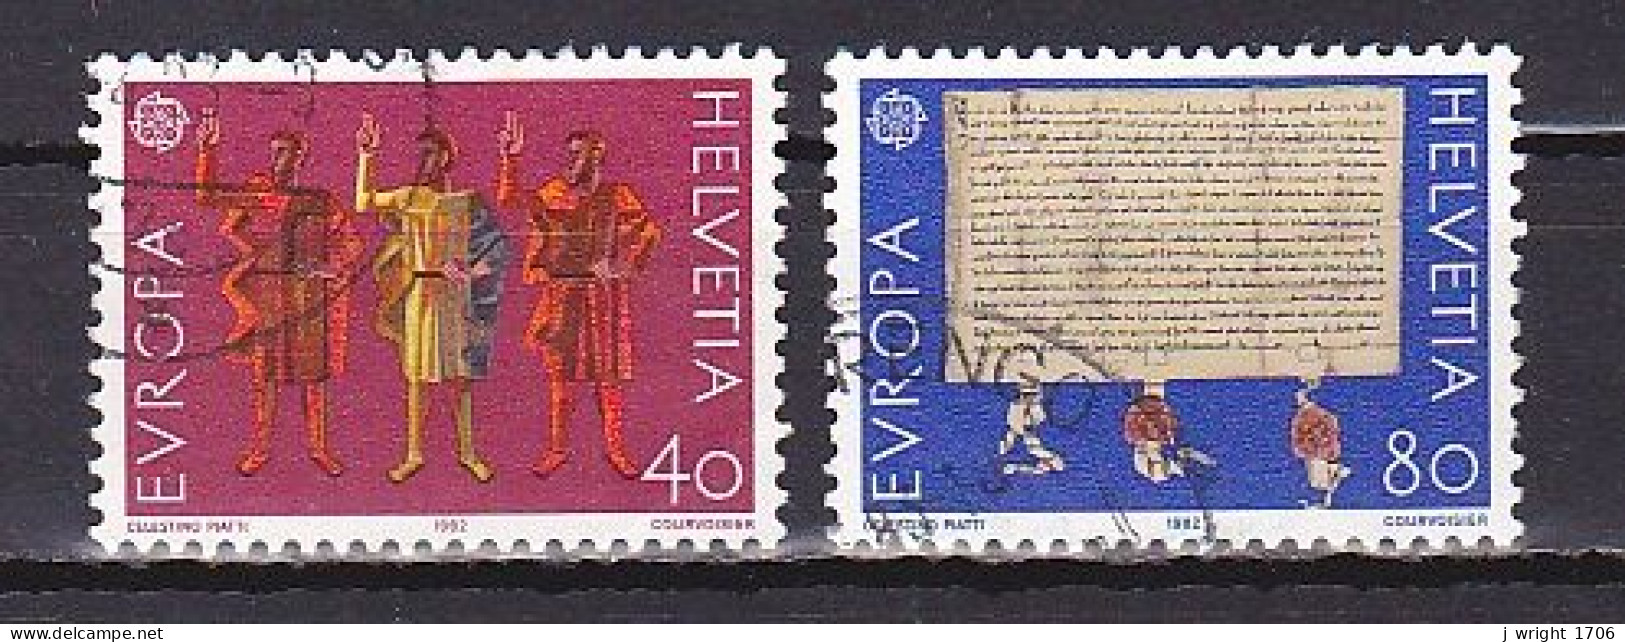 Switzerland, 1982, European CEPT, Set, USED - Used Stamps